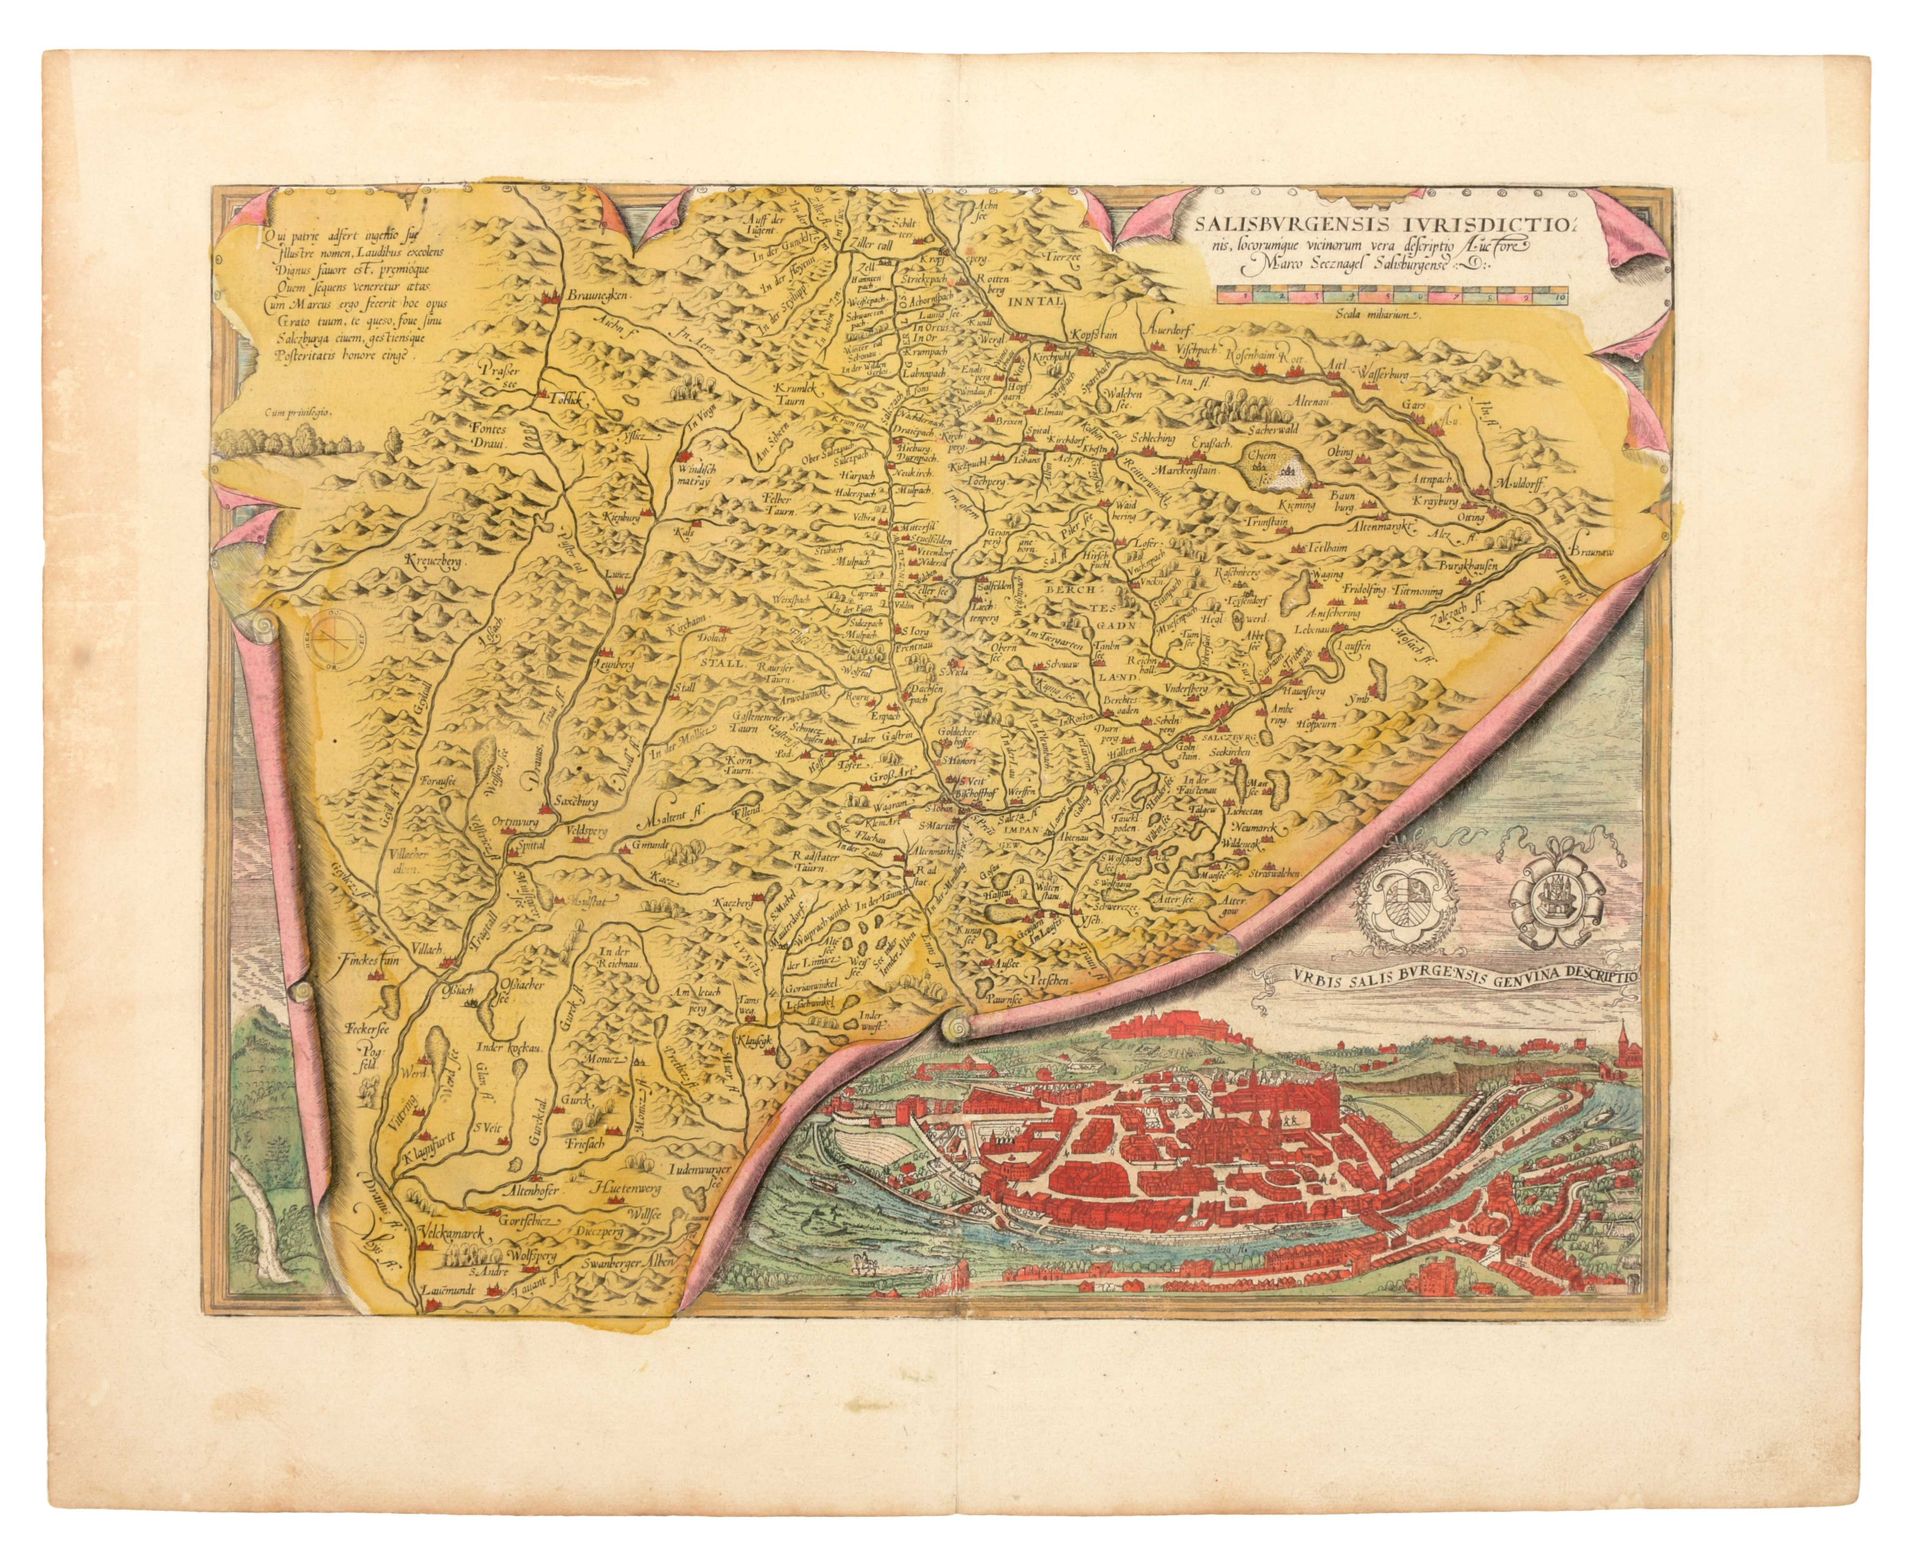 [SALZBURG] Salisburgensis Jurisdictio

Original handkolorierte Karte (34 x 44 cm&hellip;